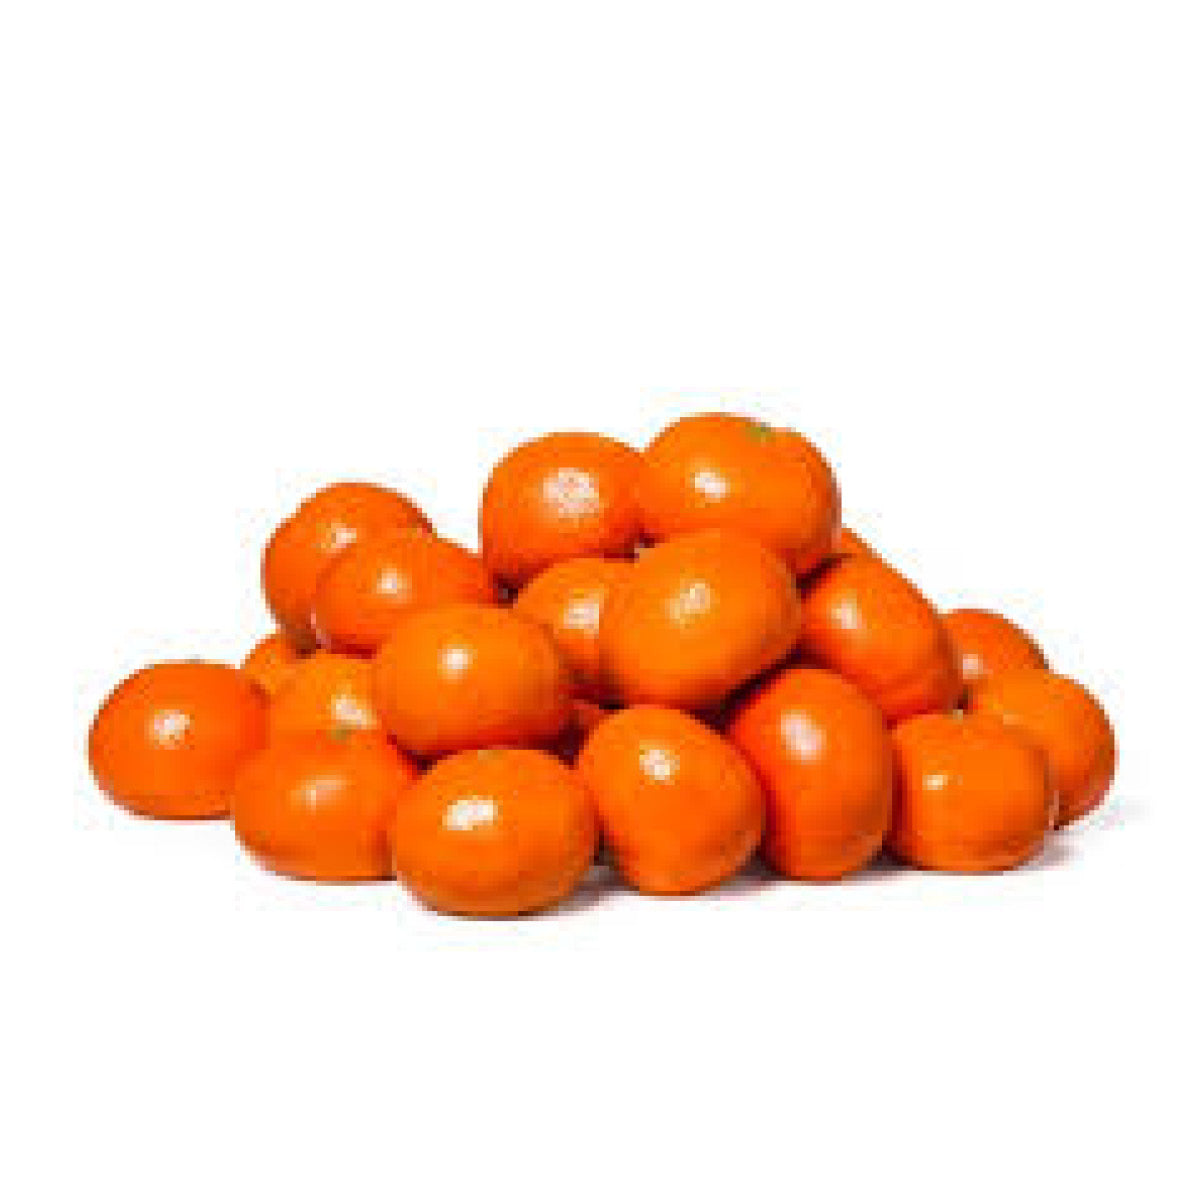 Mandarin Oranges 2lb bag